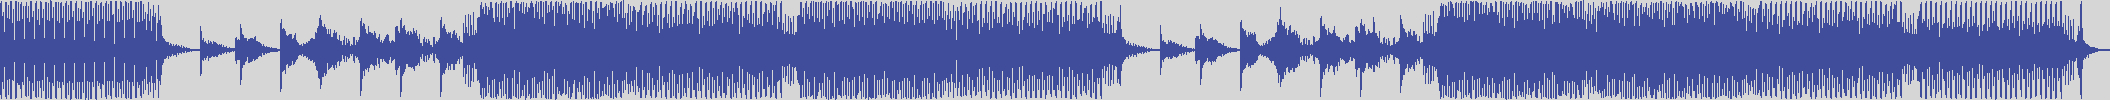 nf_boyz_records [NFY033] Ray Mas - Erotika Stomp [Super Factory's Deephouse Mix] audio wave form